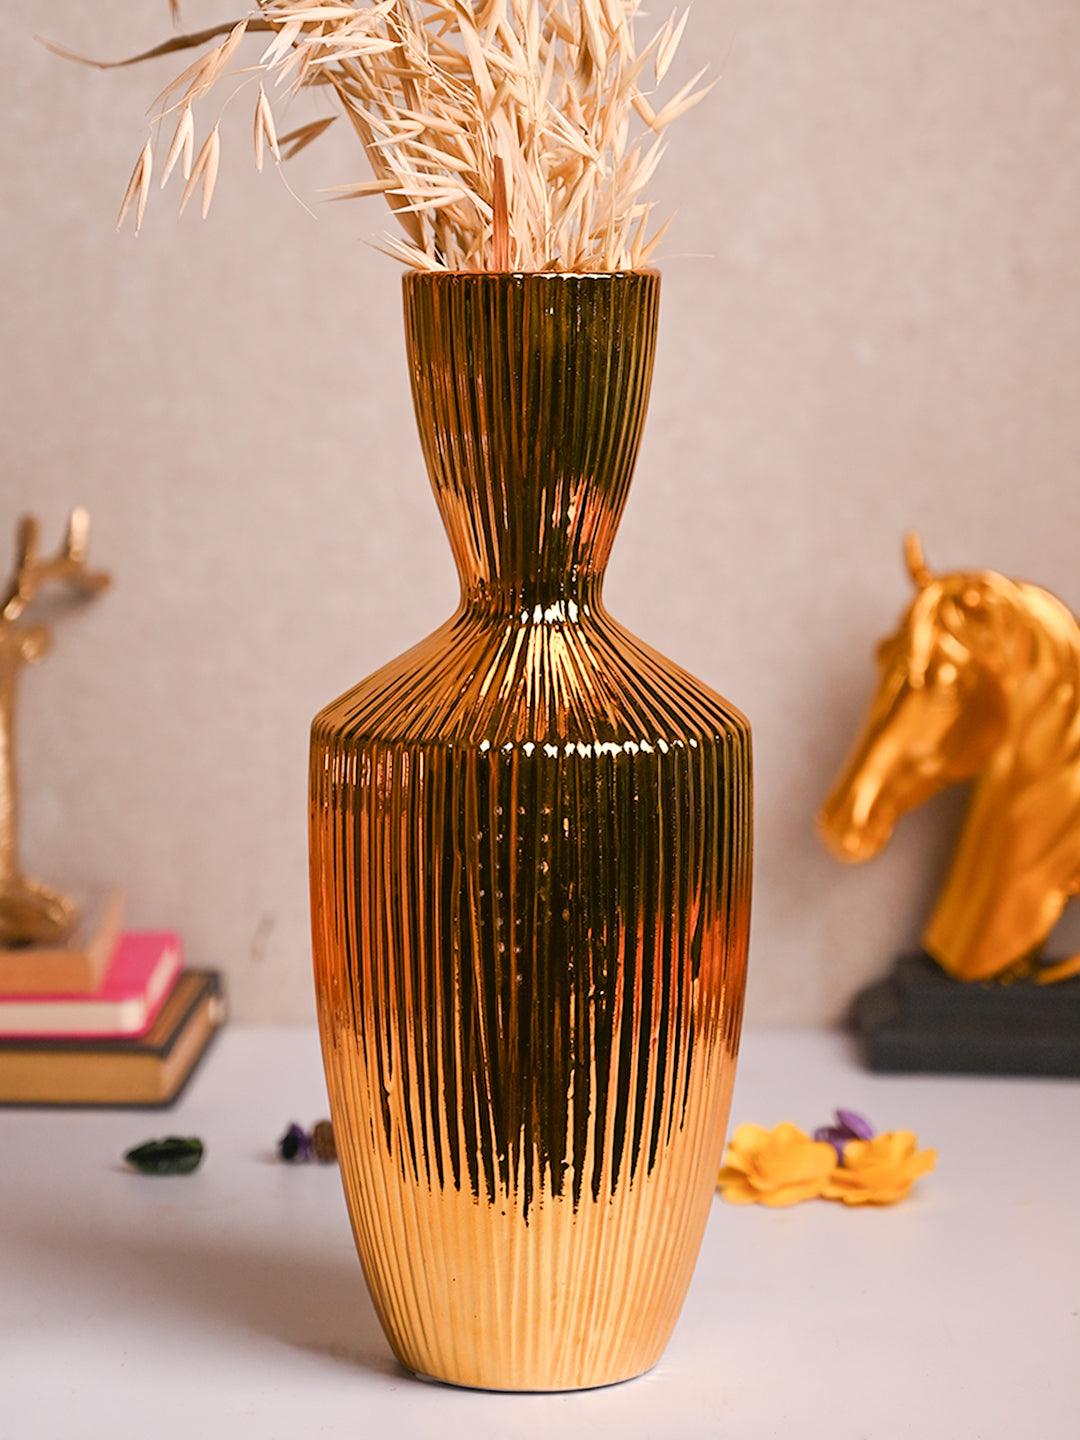 Stylish Ceramic Vase - White & Golden, Contemporary Design